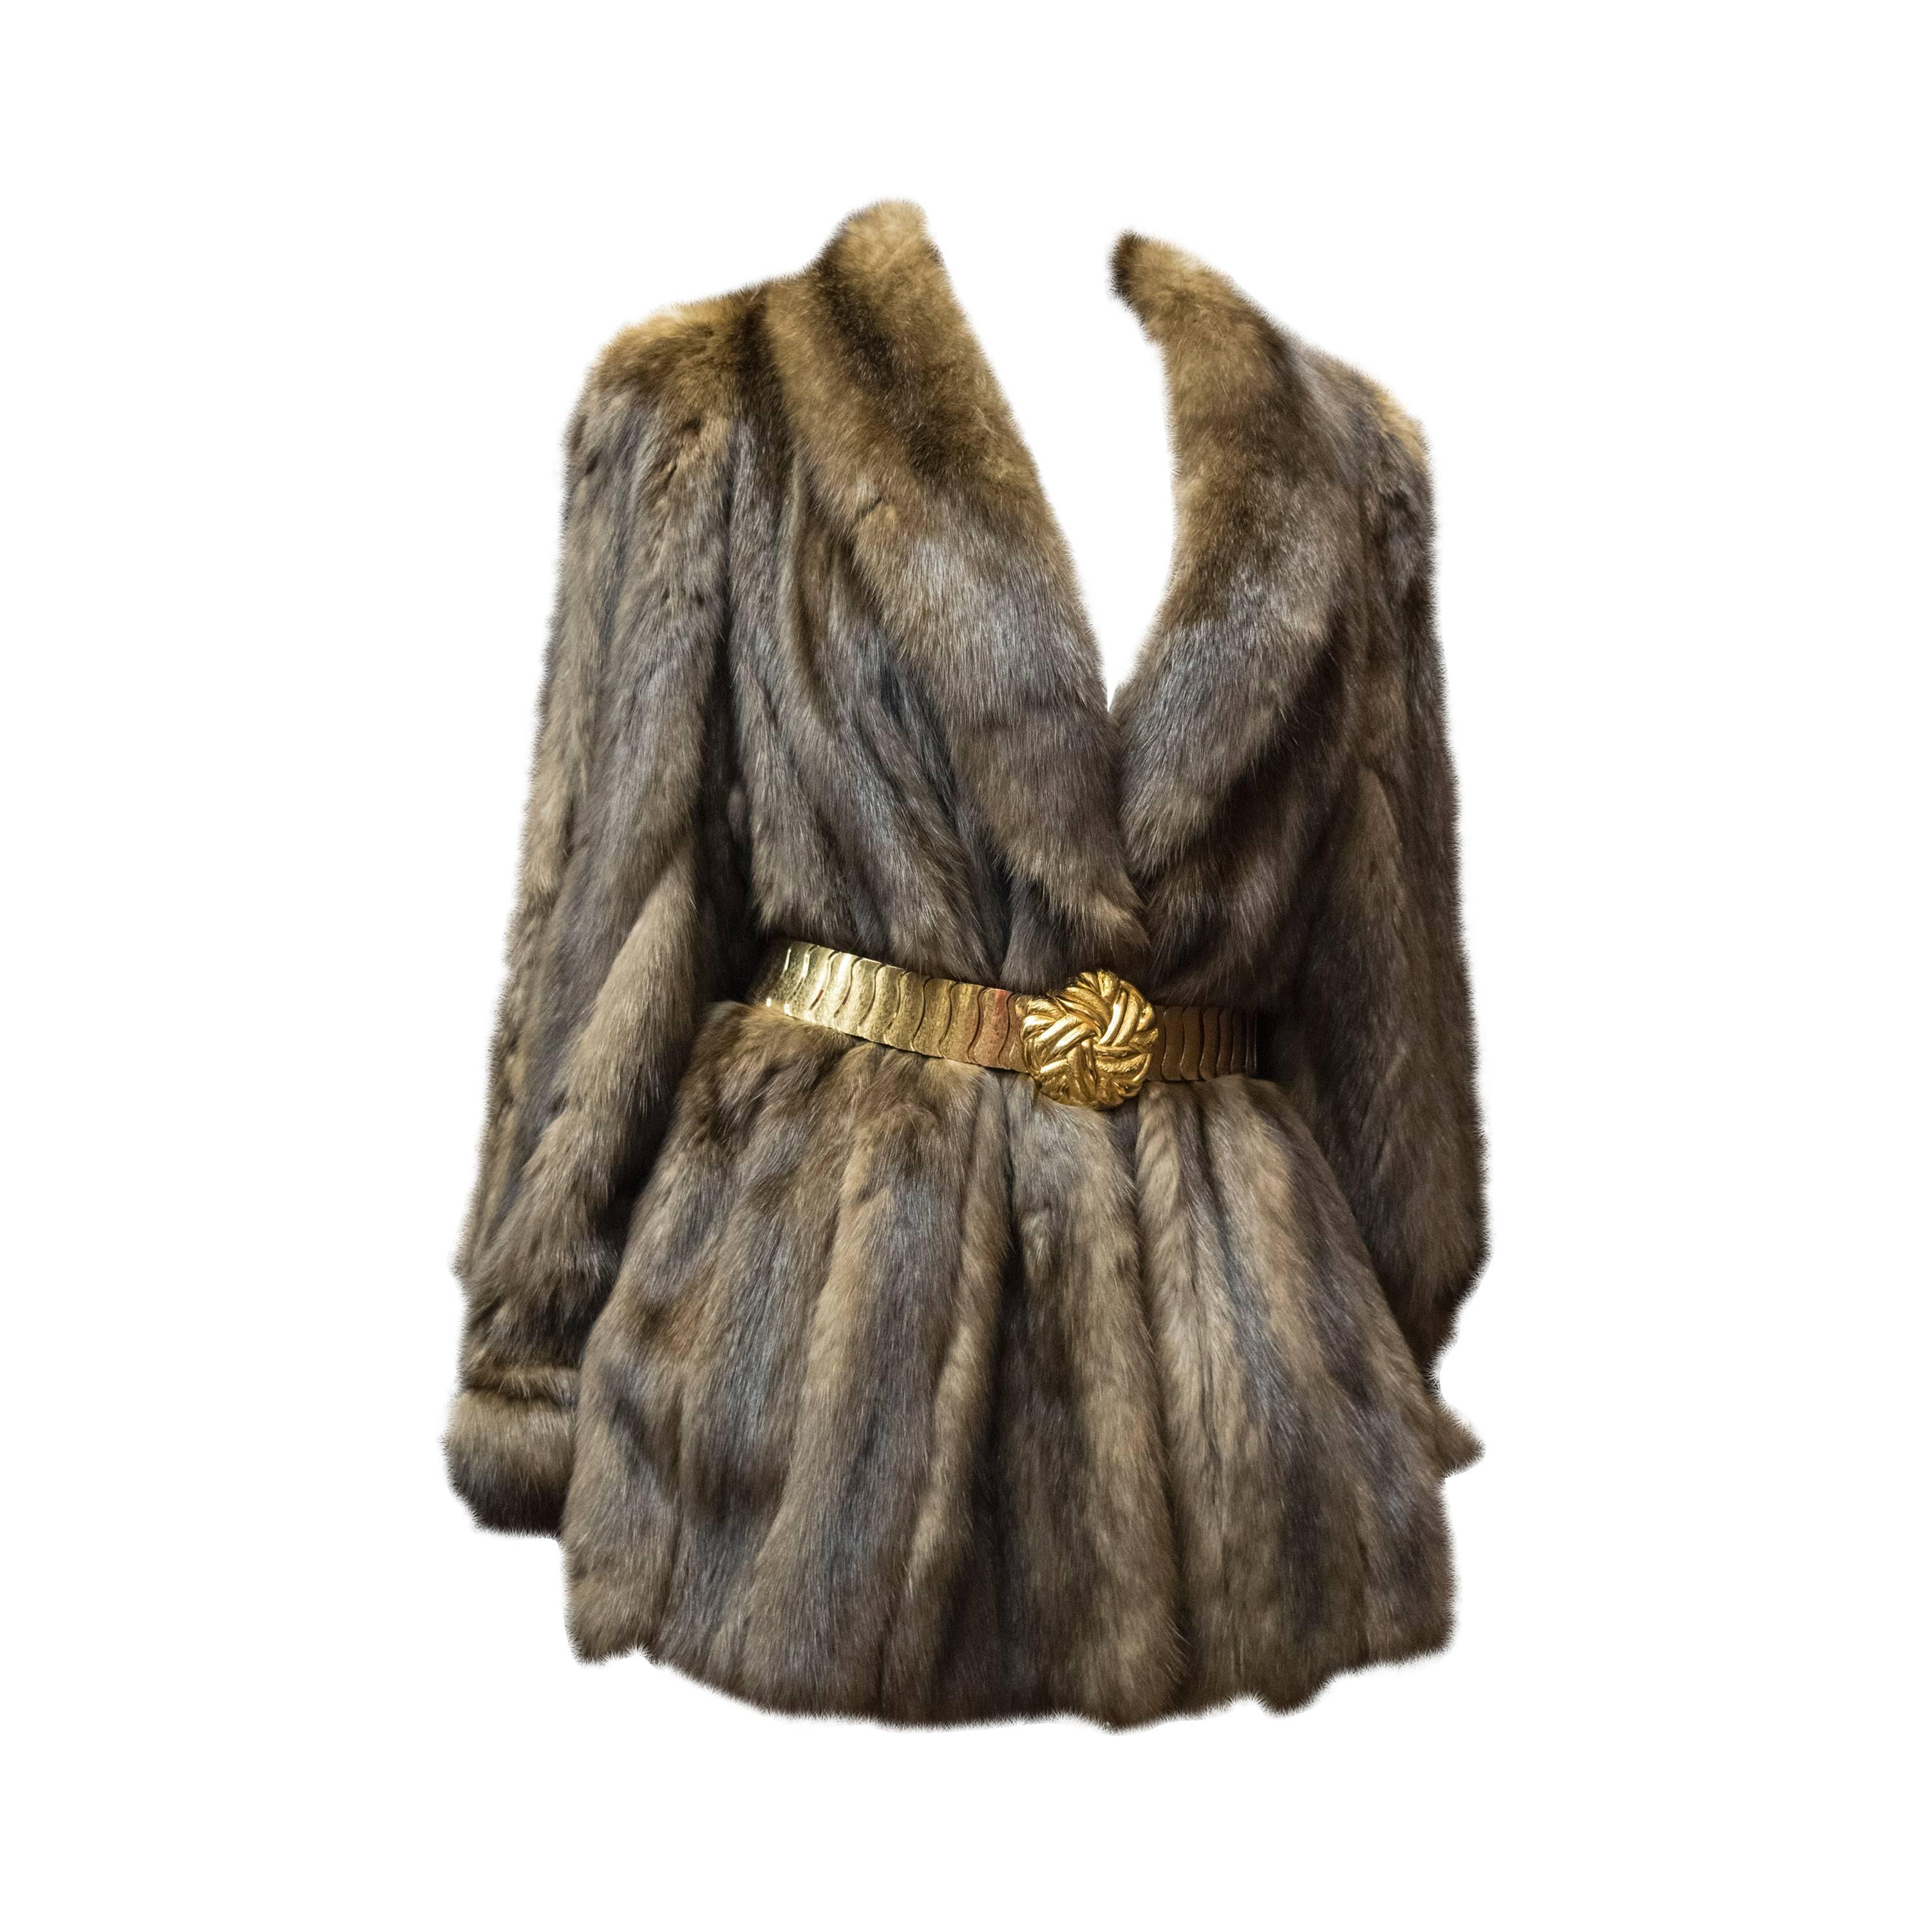 Karl Lagerfeld Sable Fur Coat. 